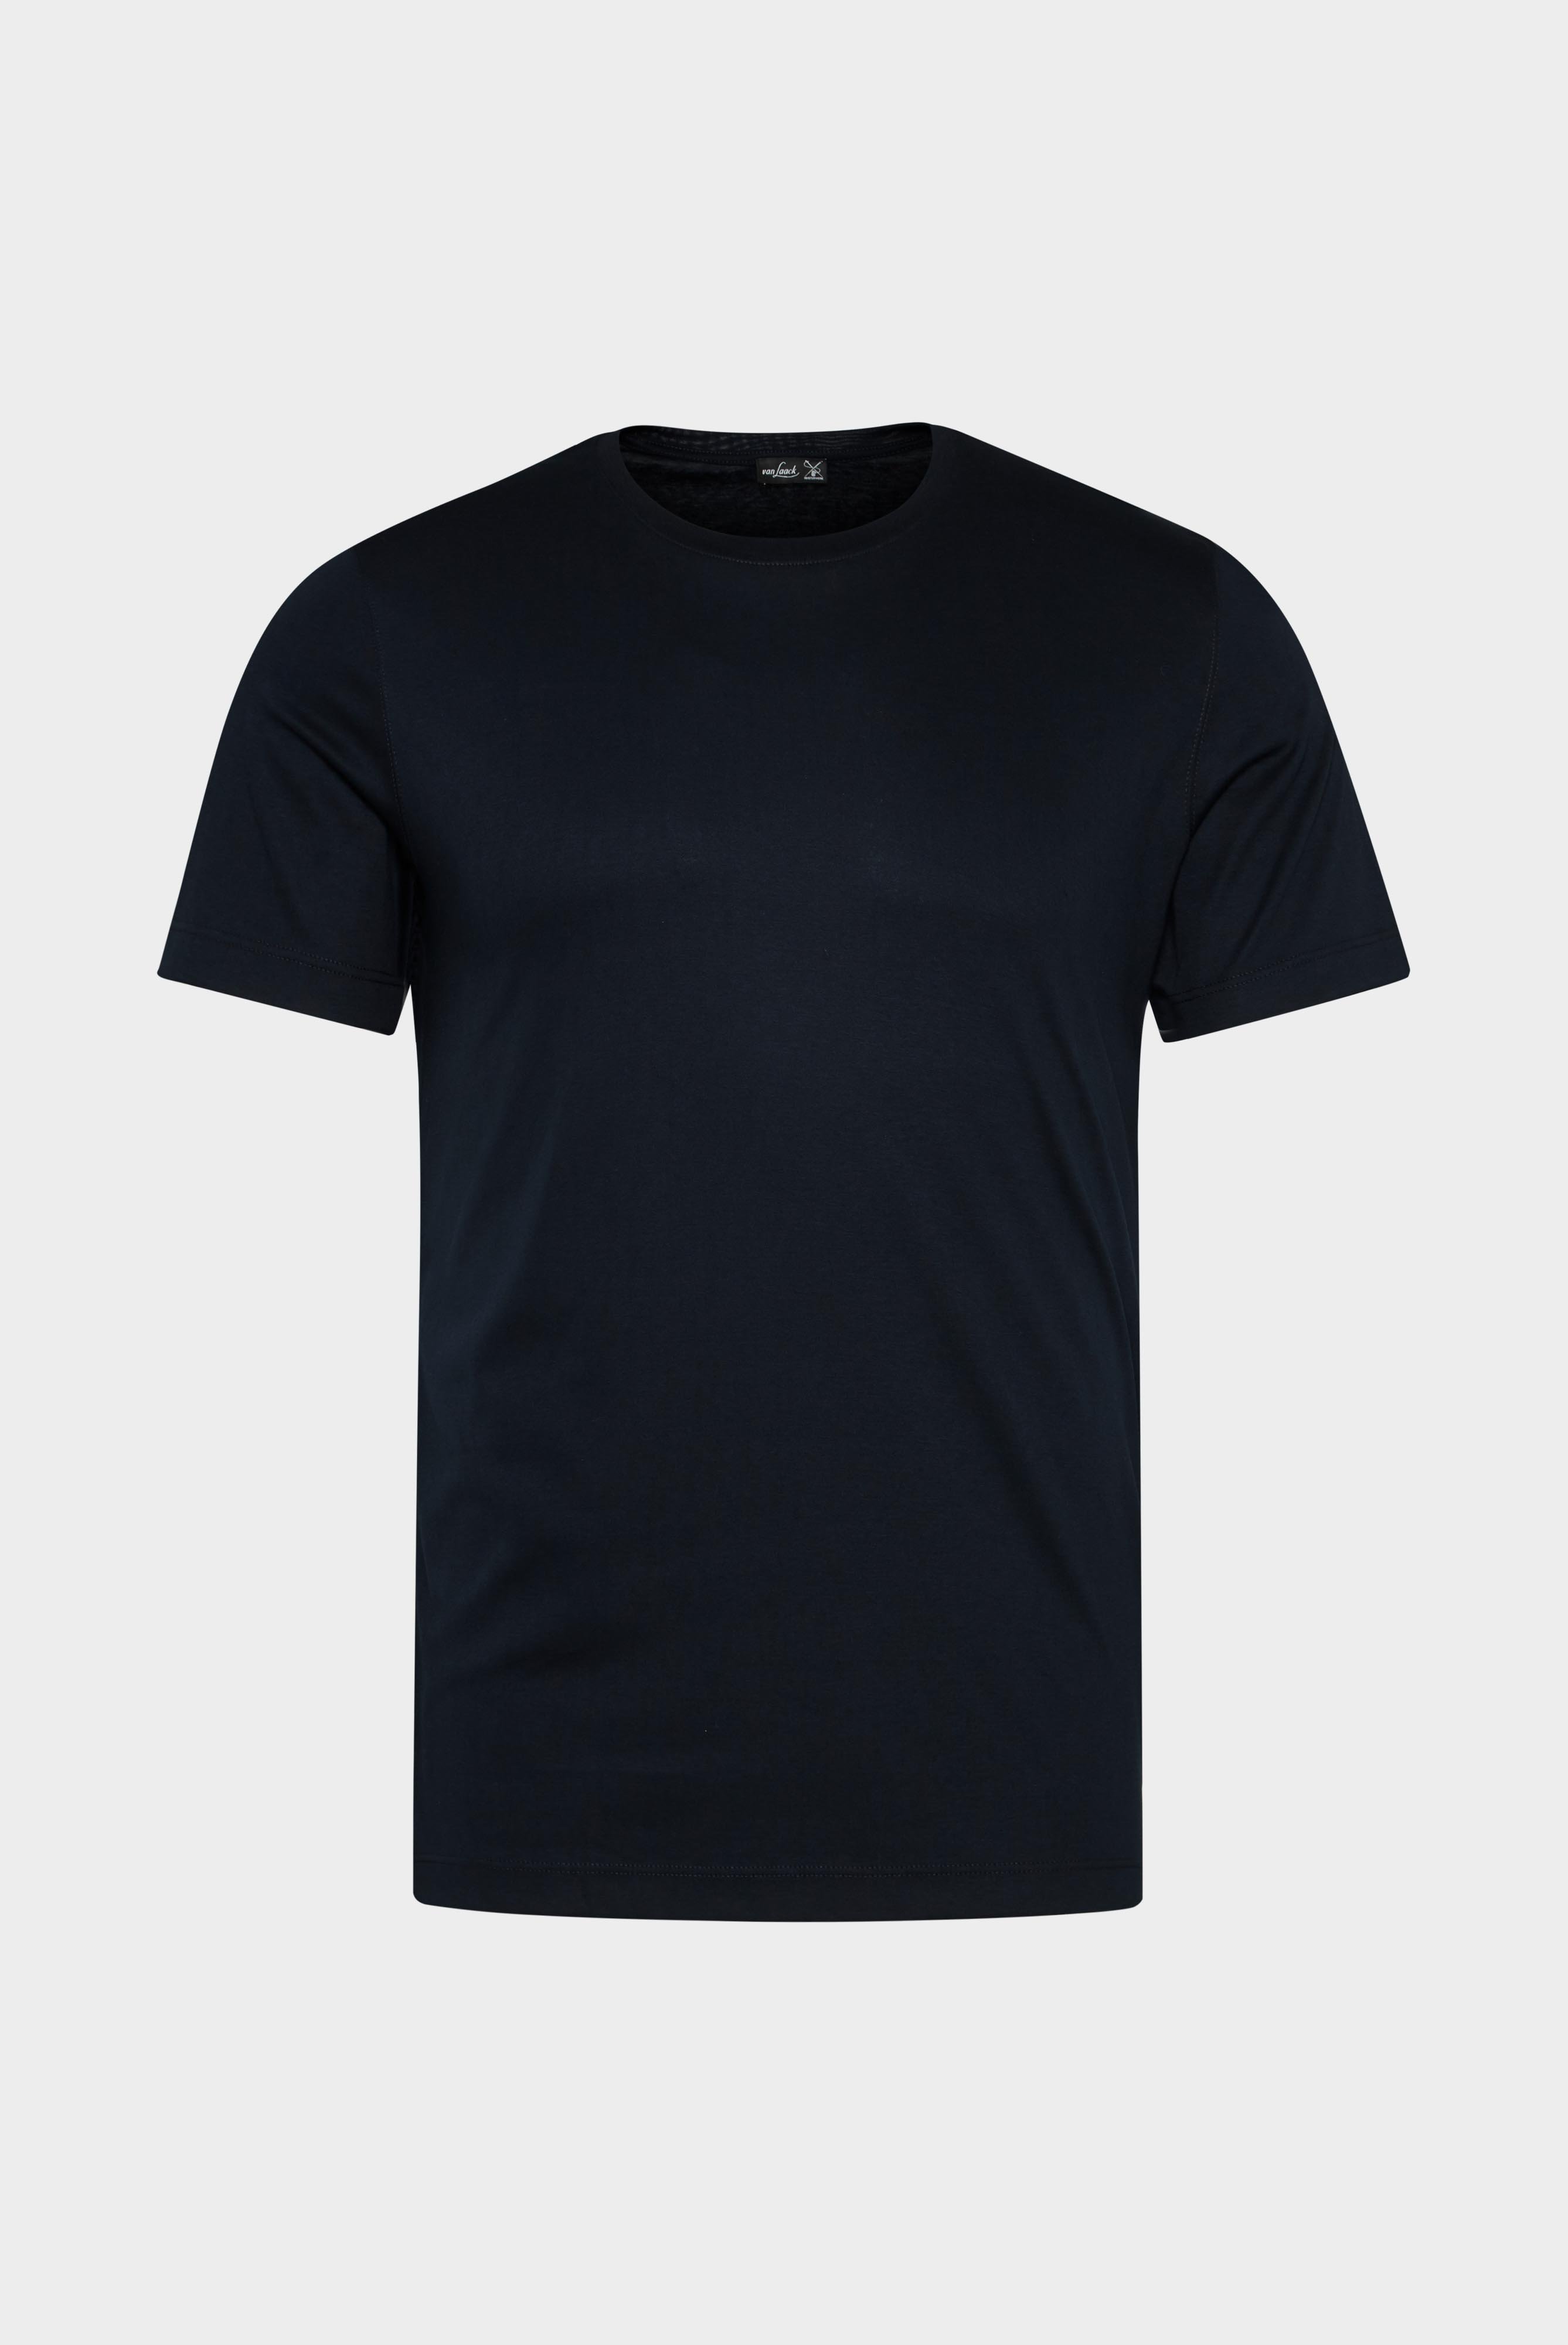 T-Shirts+Rundhals Jersey T-Shirt Slim Fit+20.1717.UX.180031.790.XXL